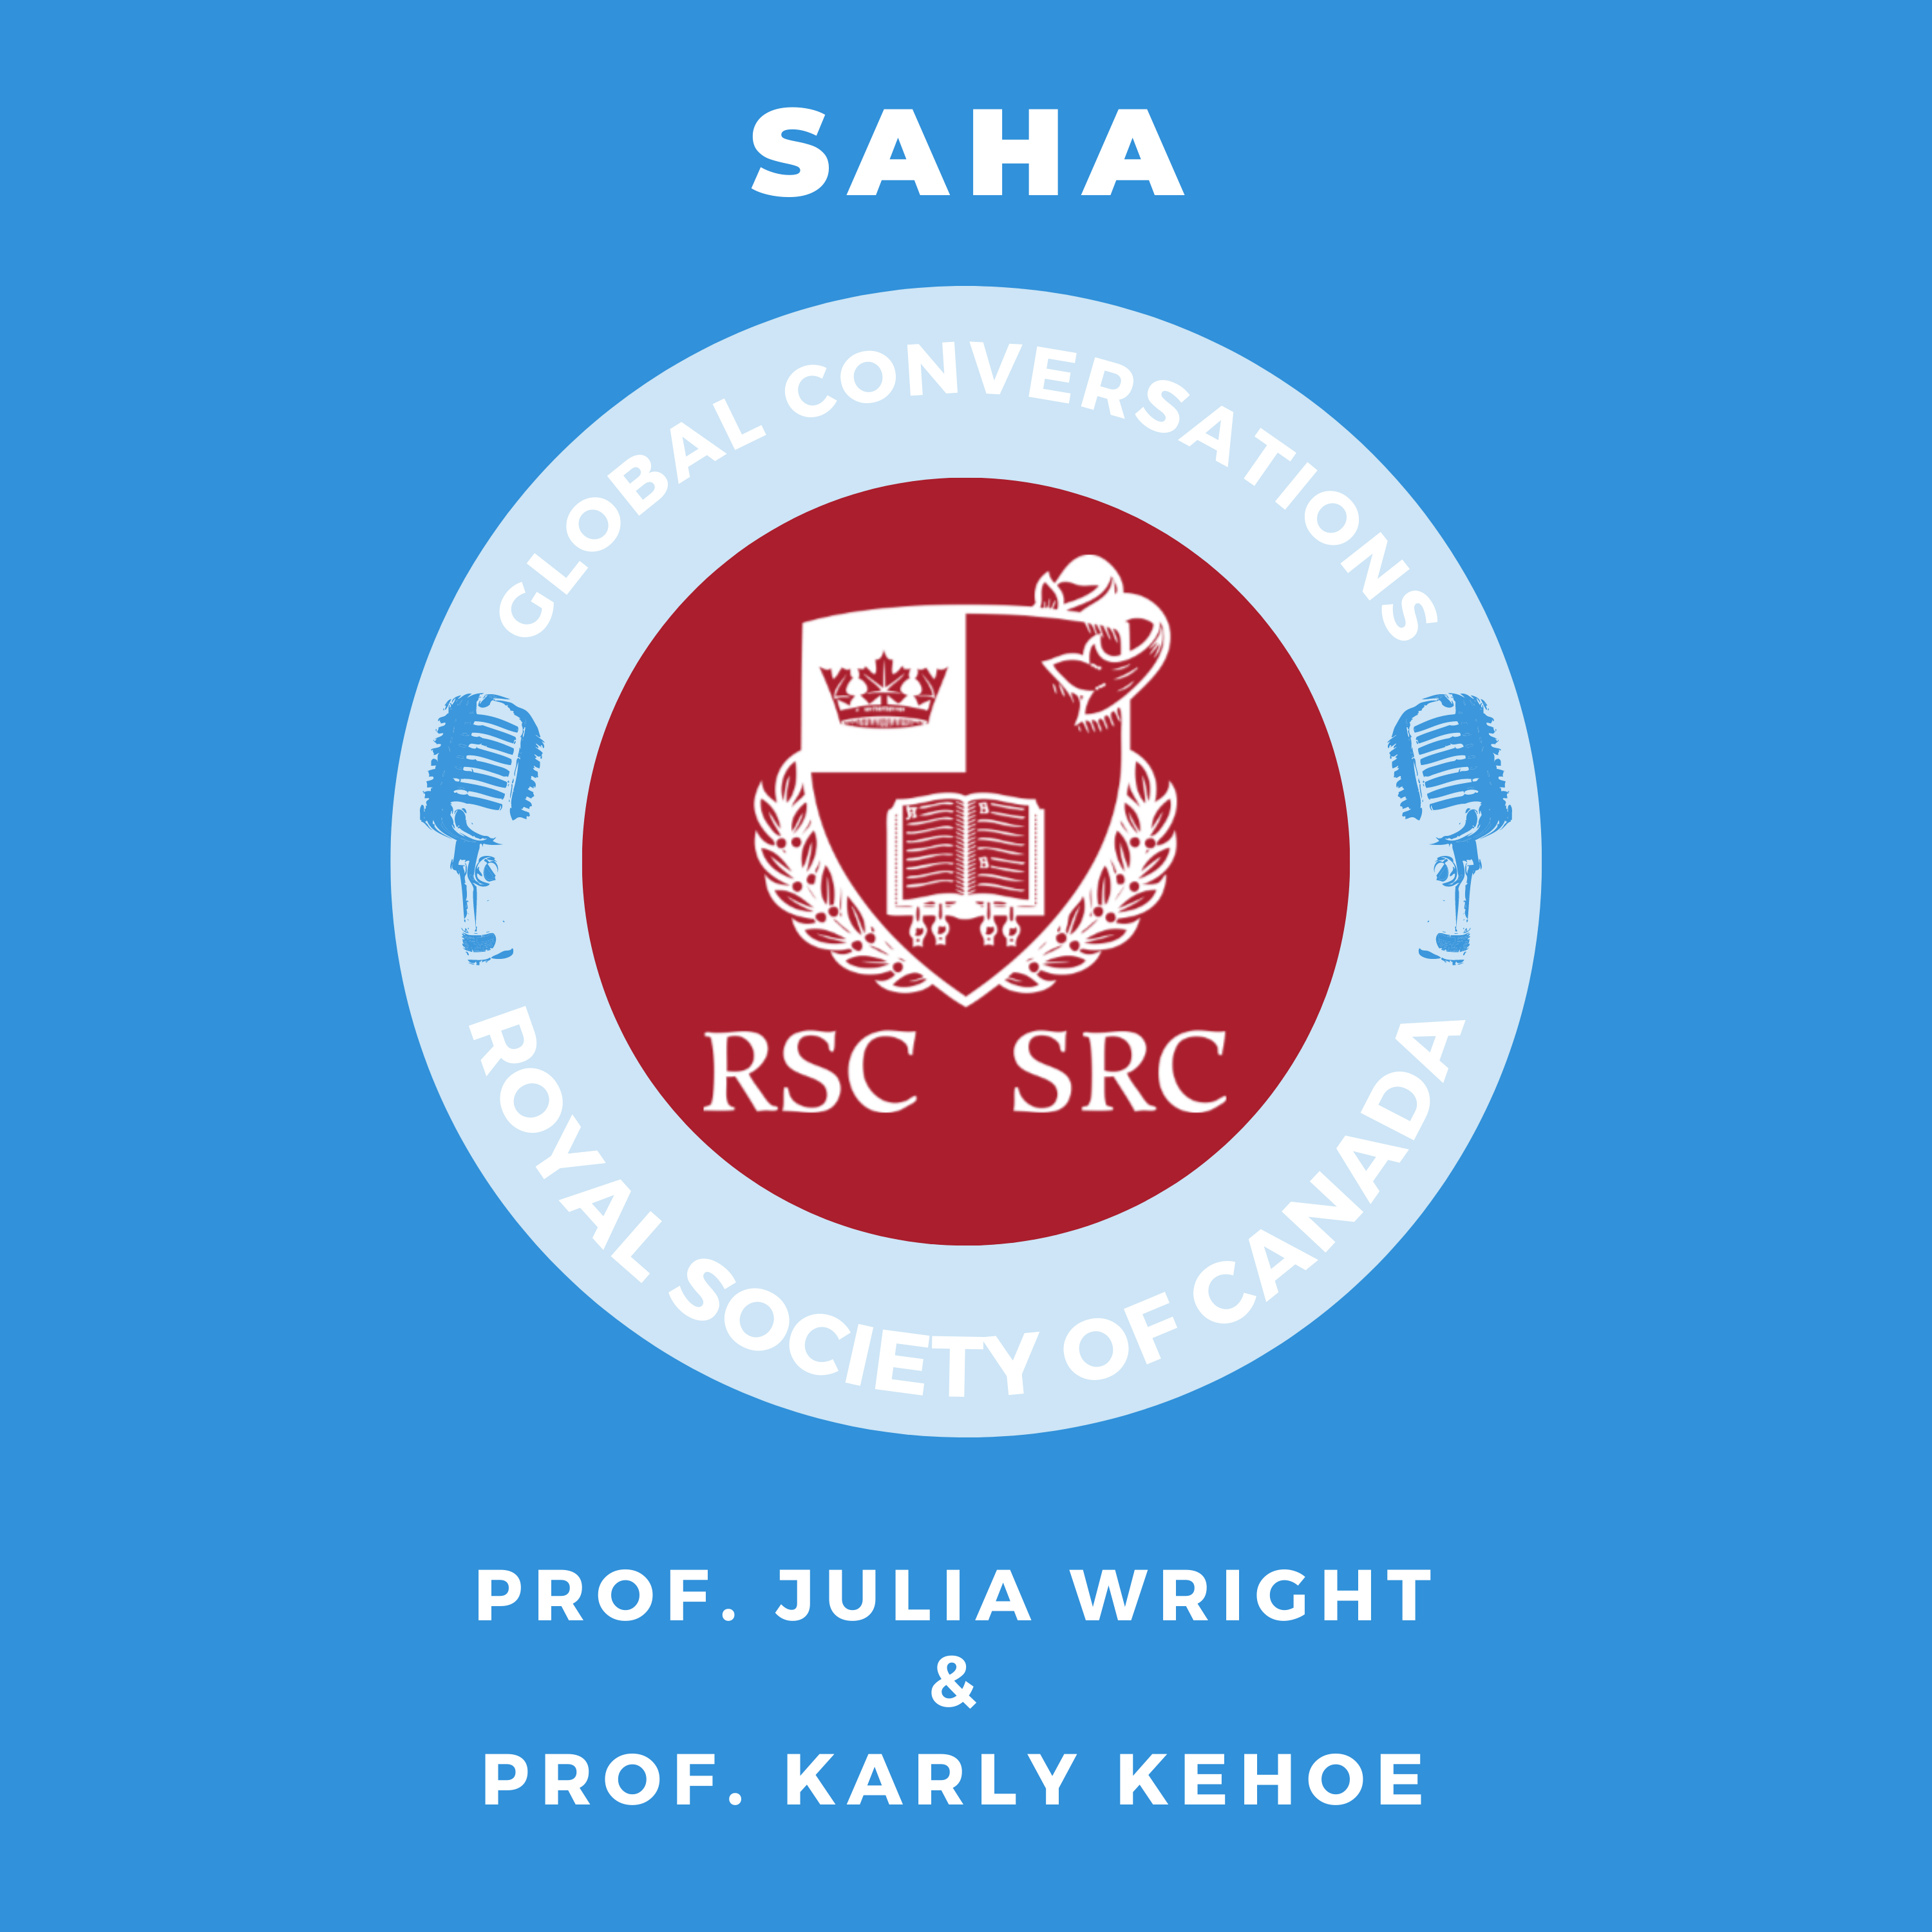 SAHA Global Conversations - Royal Society of Canada